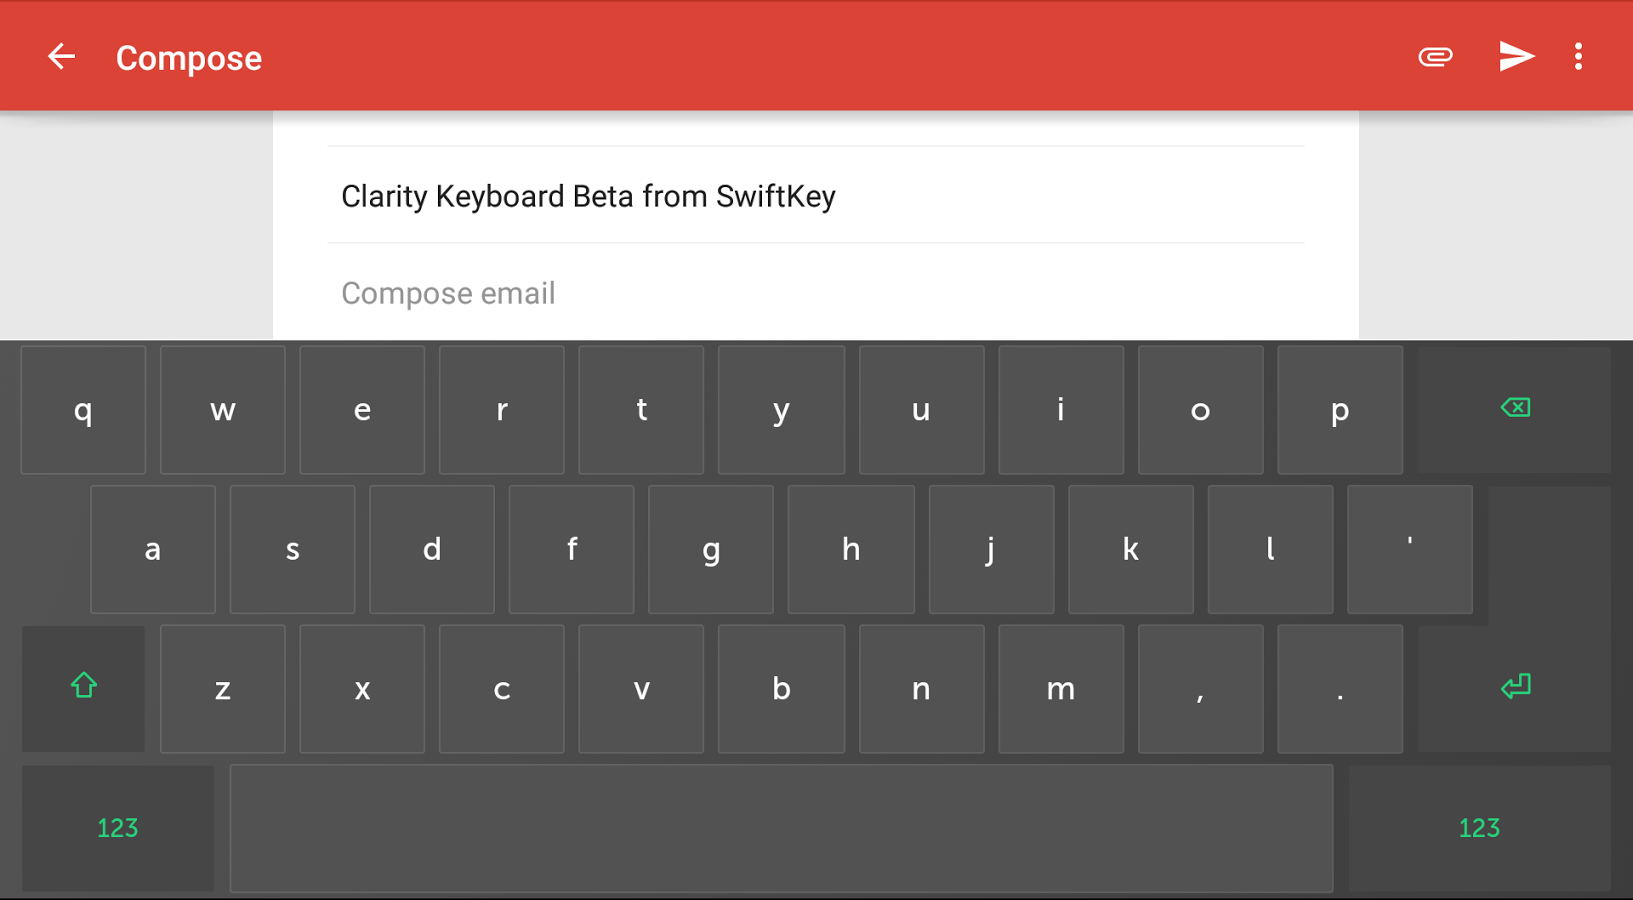 Clarity Keyboard Beta